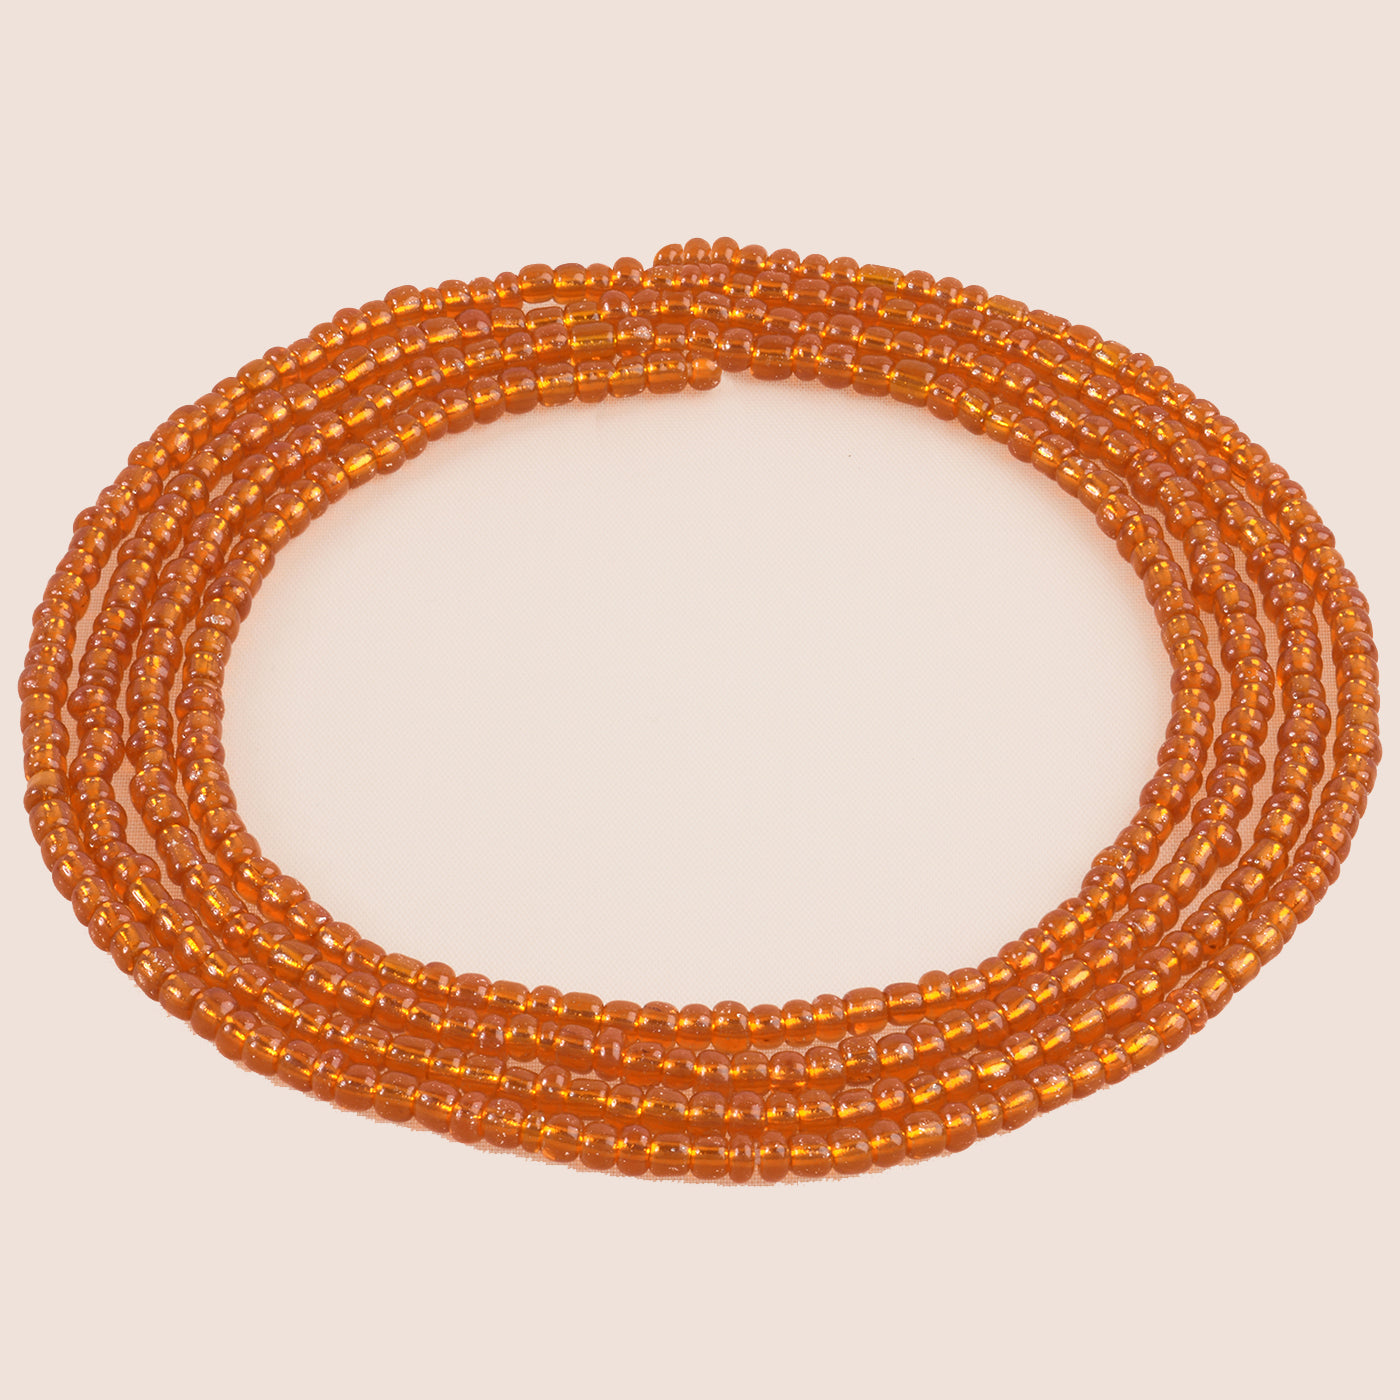 Ghana Waist Beads belly chain weight control body jewelry - Tribalgh